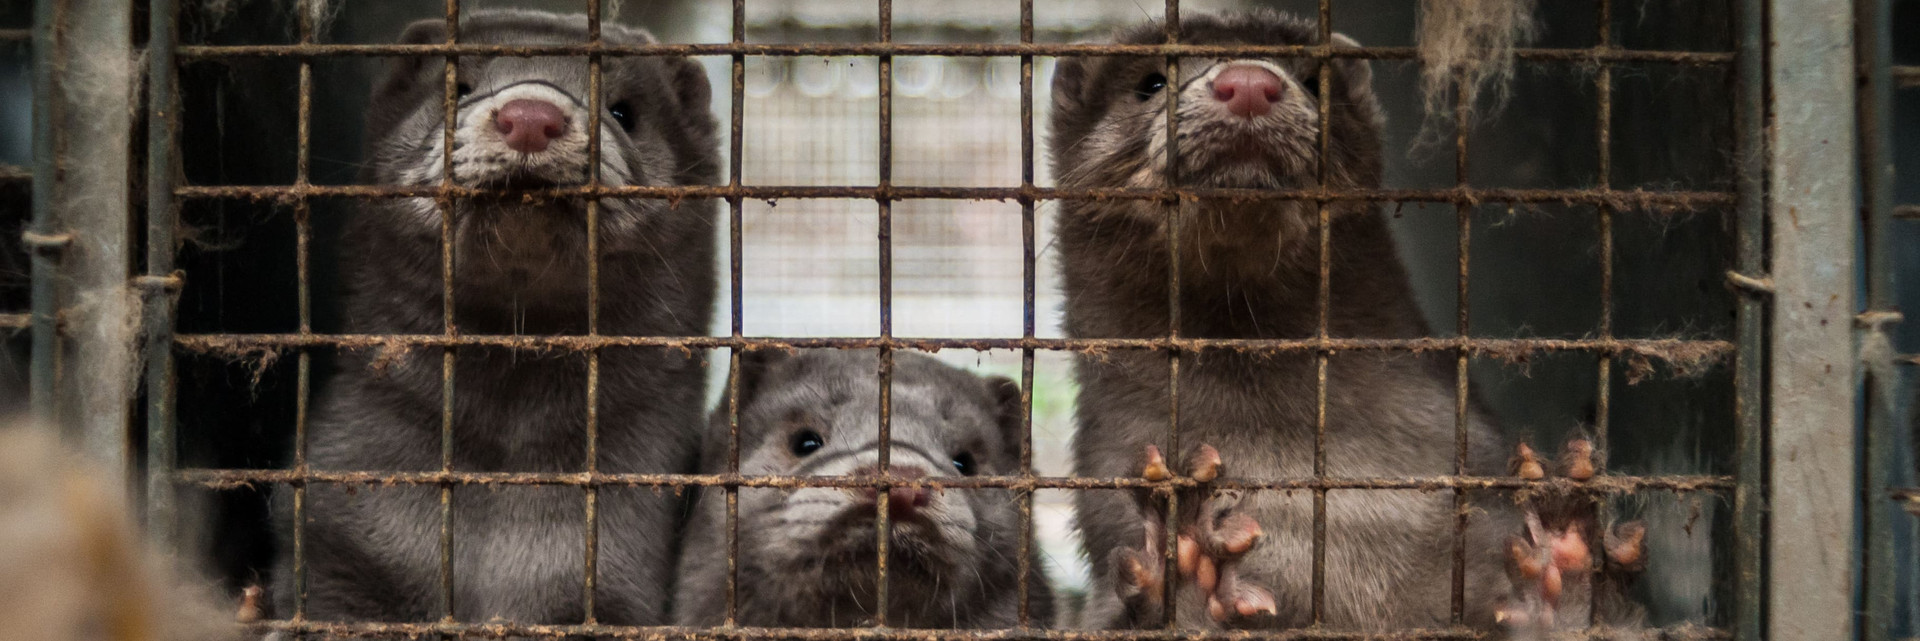 Mink caged for fur farming